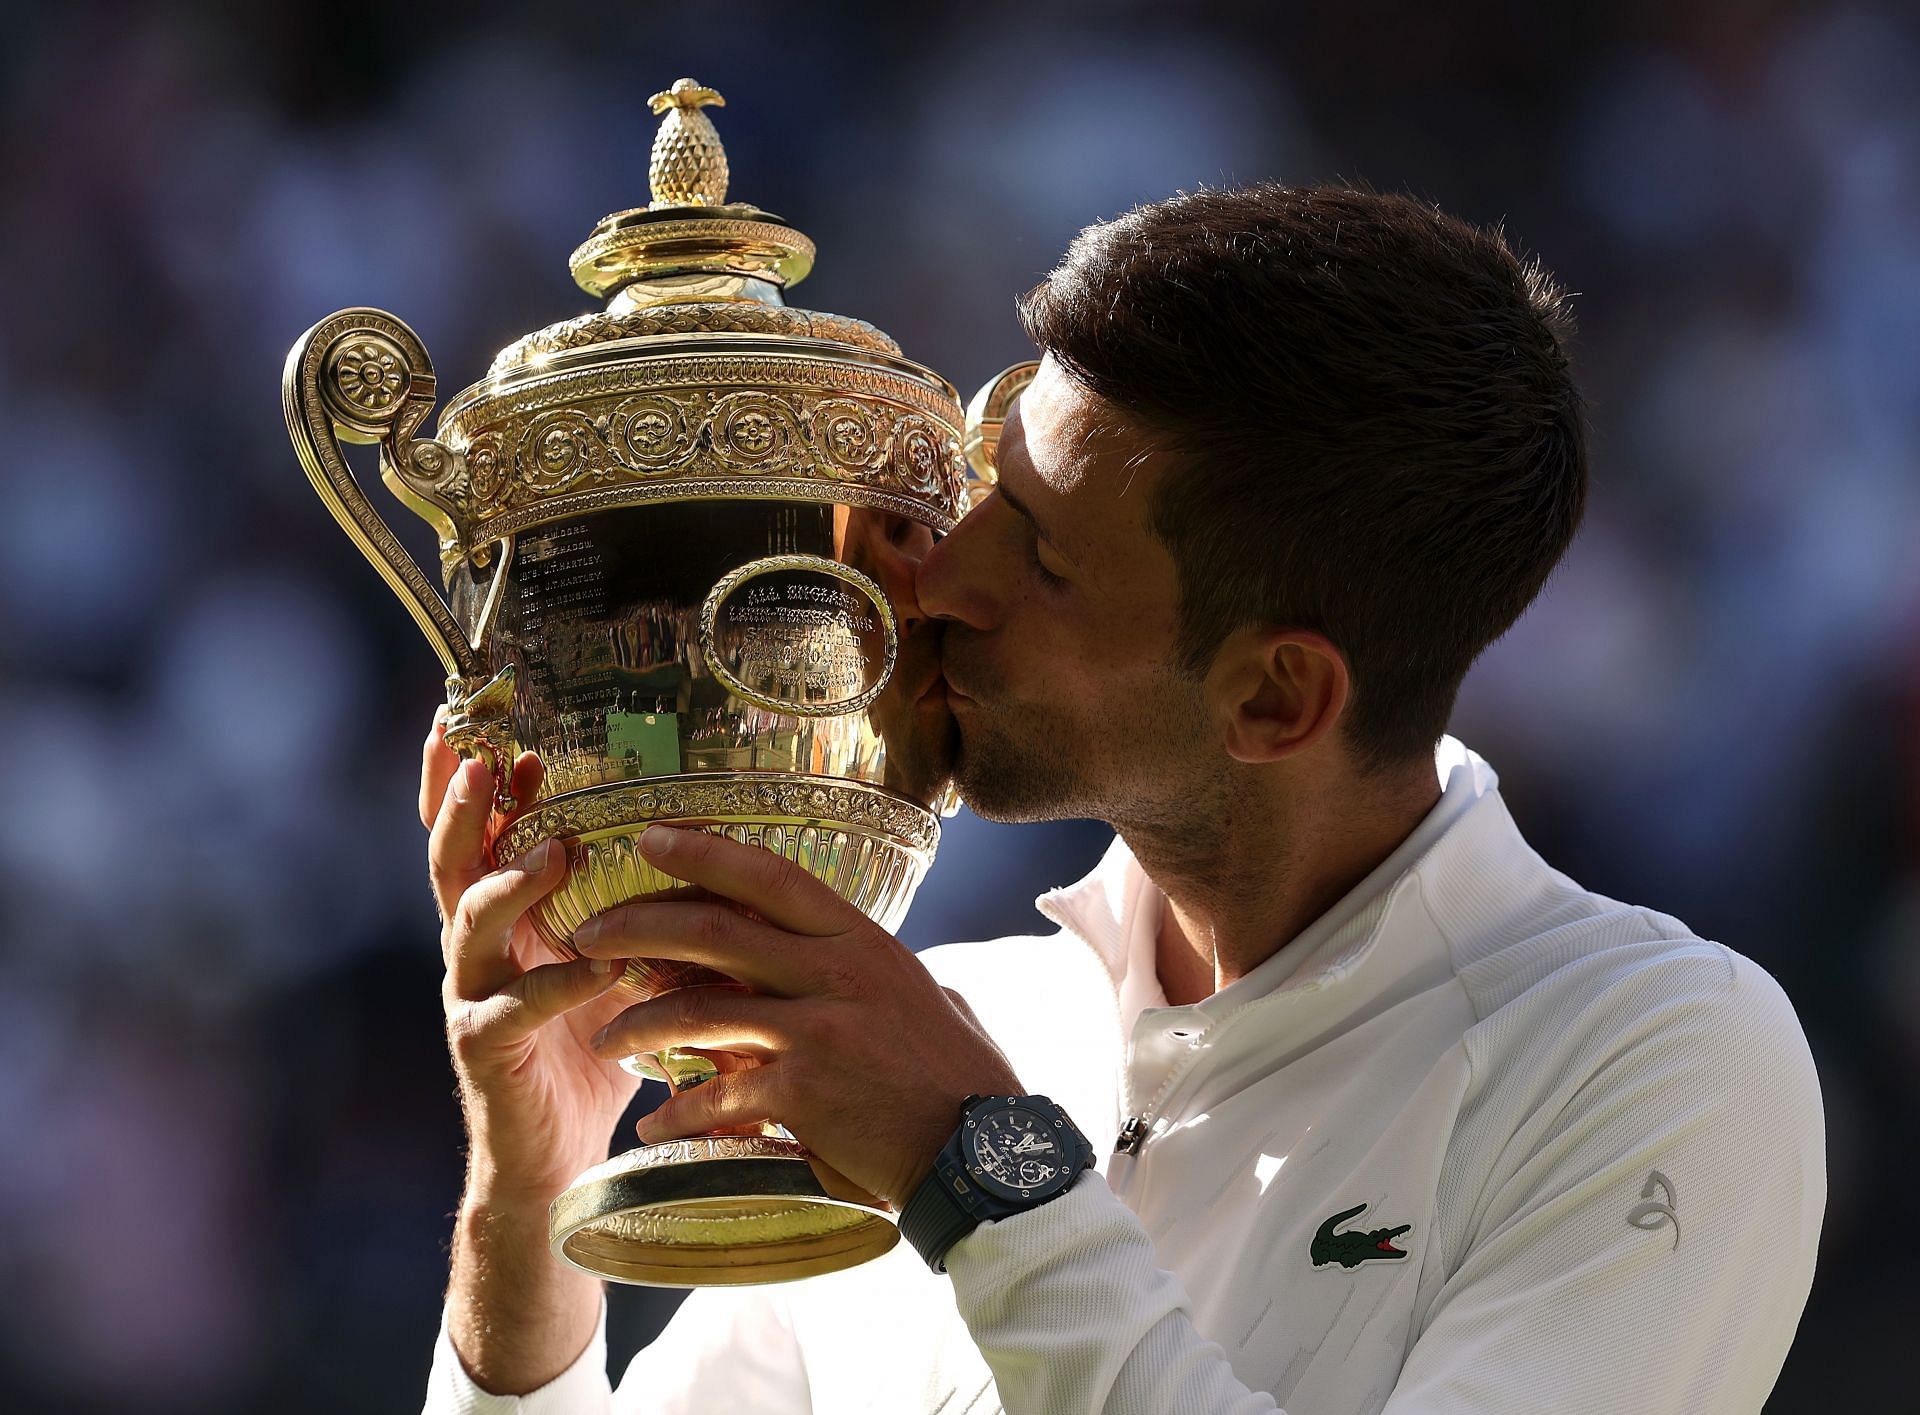 Novak Djokovic is the reigning Wimbledon champion